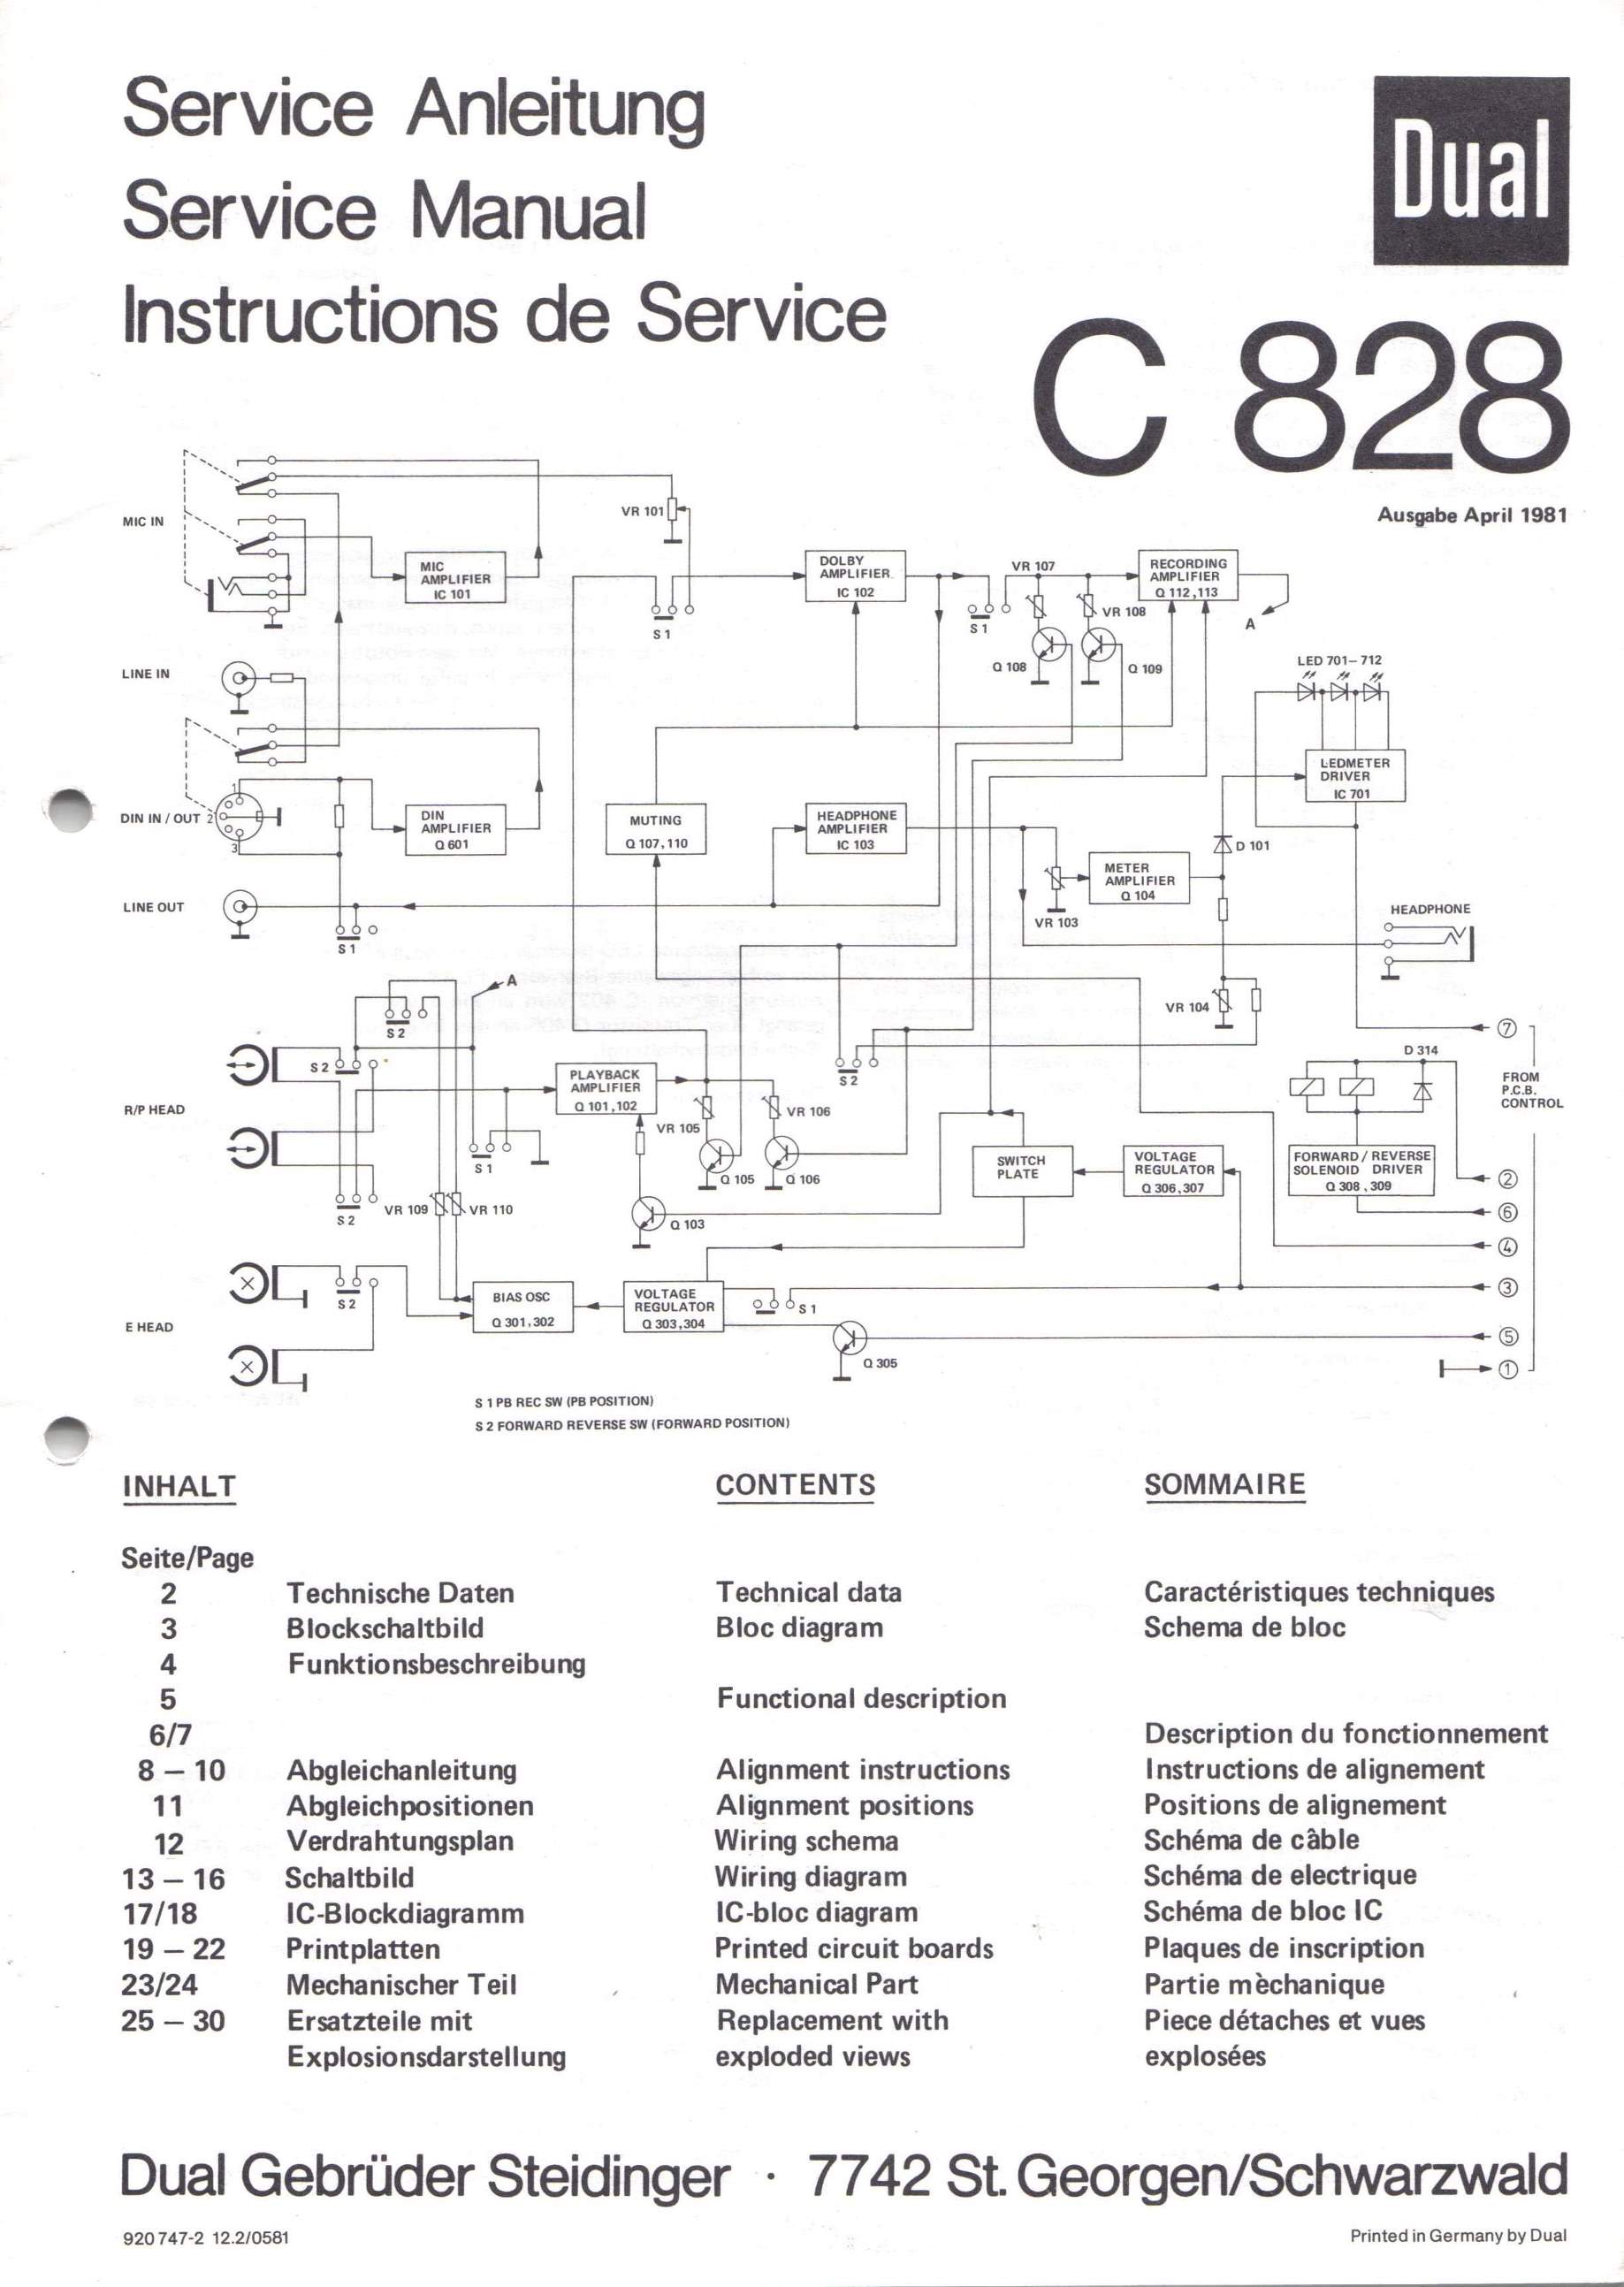 C828-01.JPG